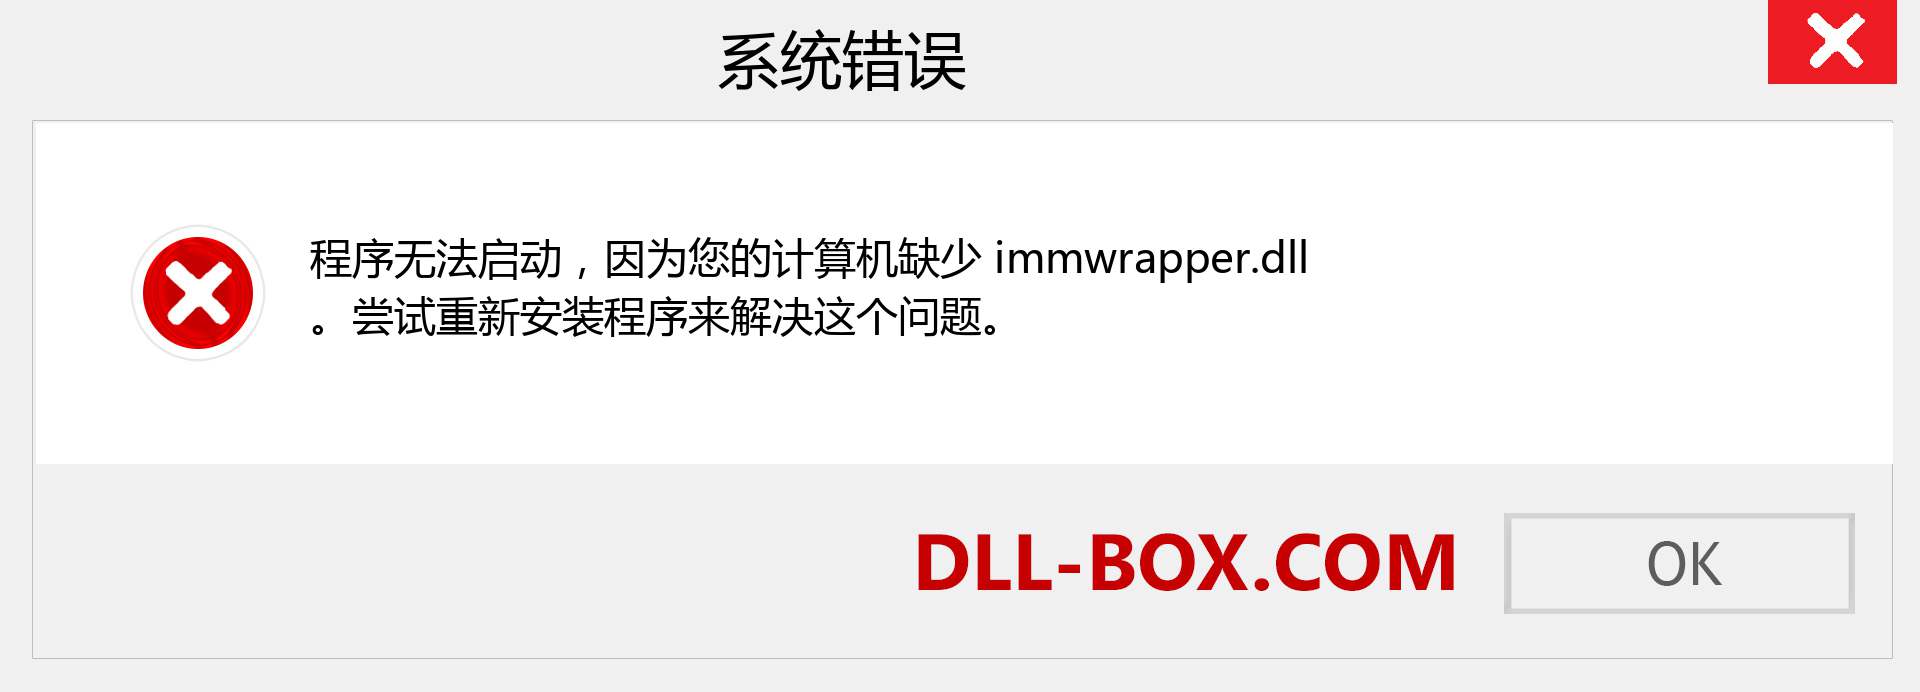 immwrapper.dll 文件丢失？。 适用于 Windows 7、8、10 的下载 - 修复 Windows、照片、图像上的 immwrapper dll 丢失错误